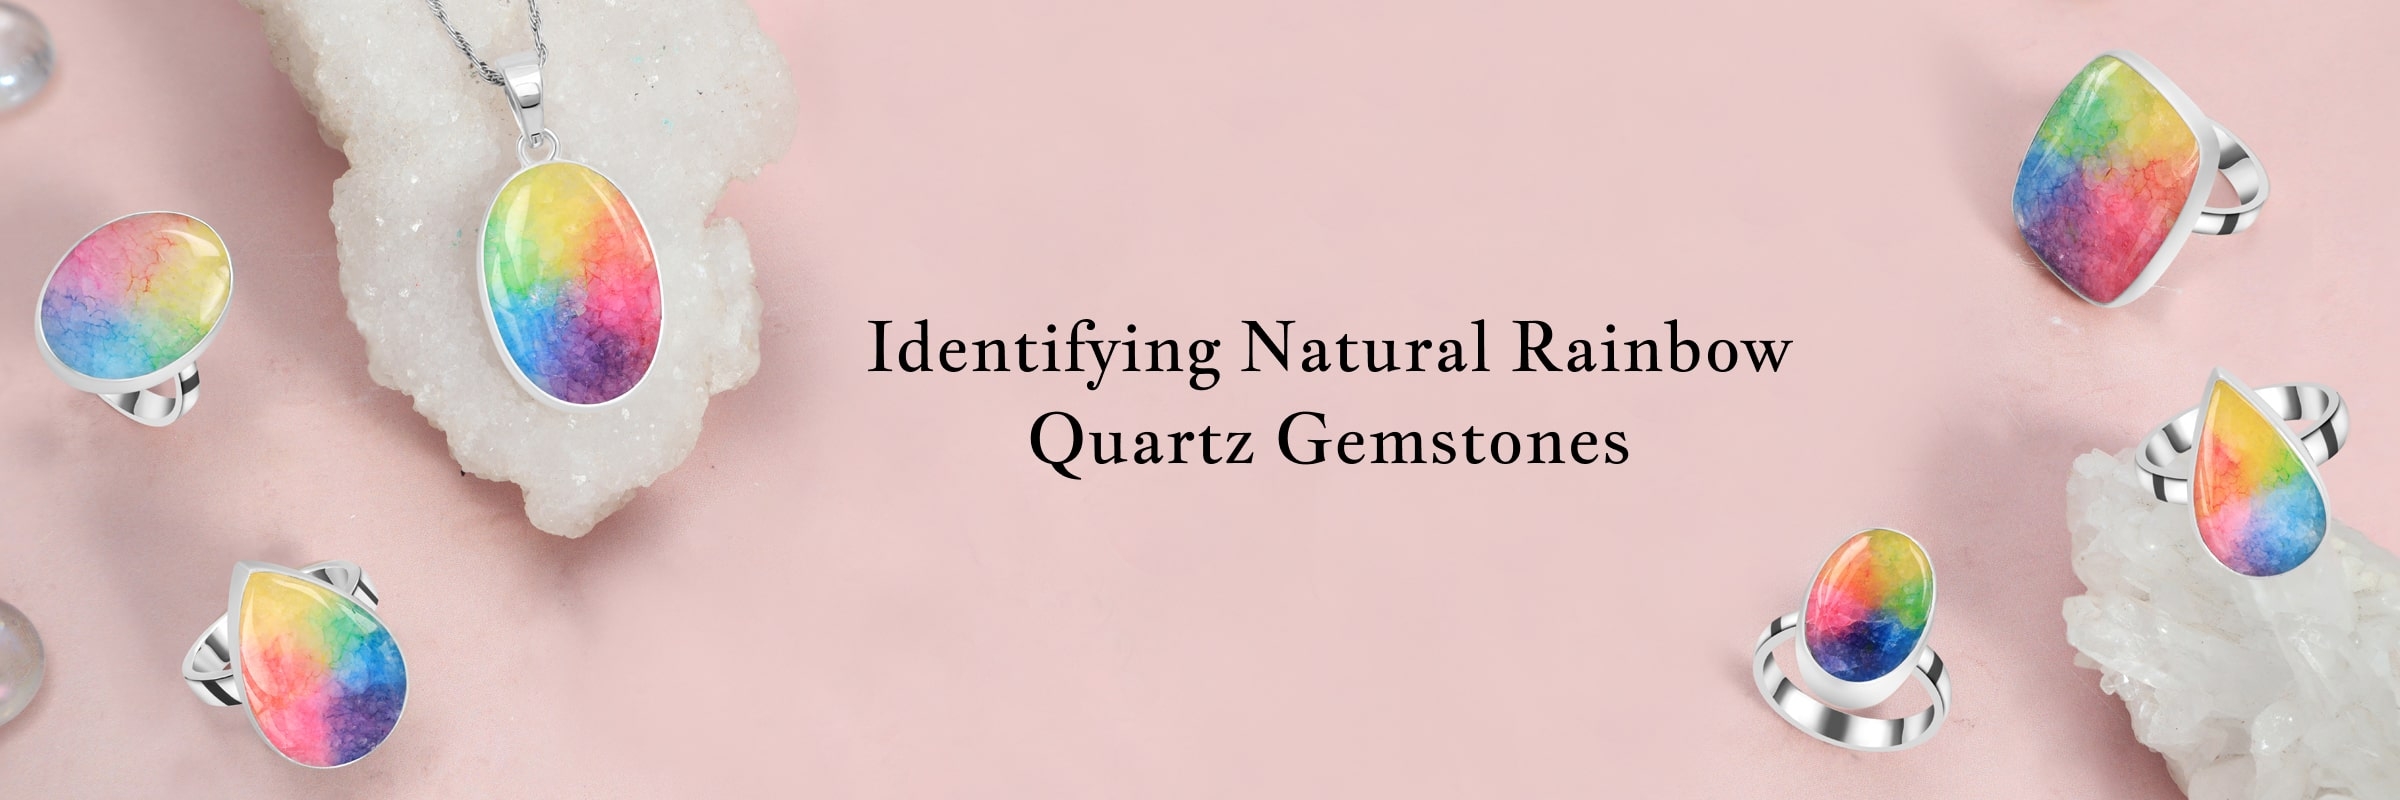 Is Rainbow Quartz Considered a Natural Gemstone